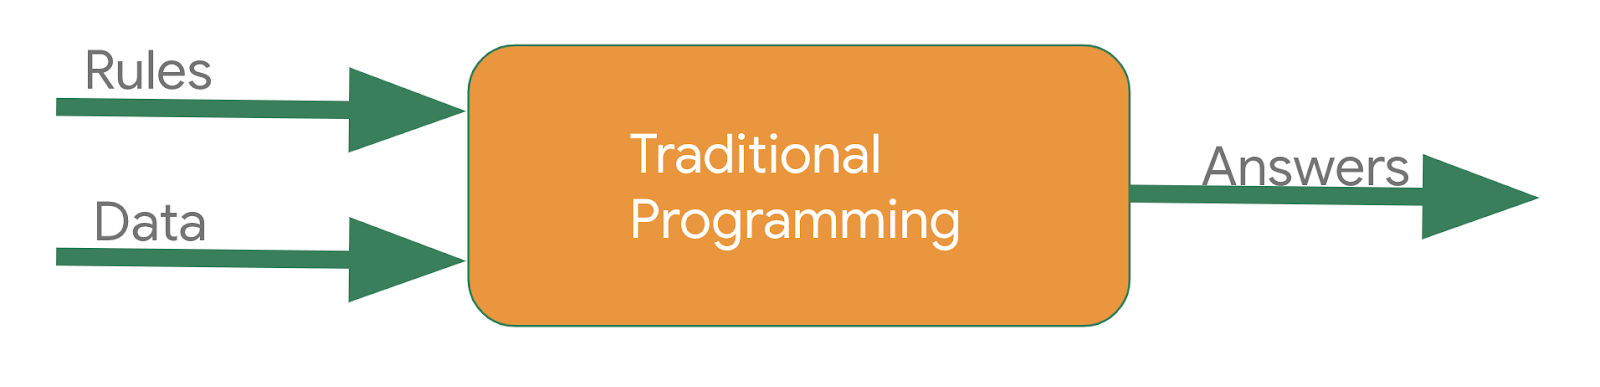 Traditional Programming Diagram